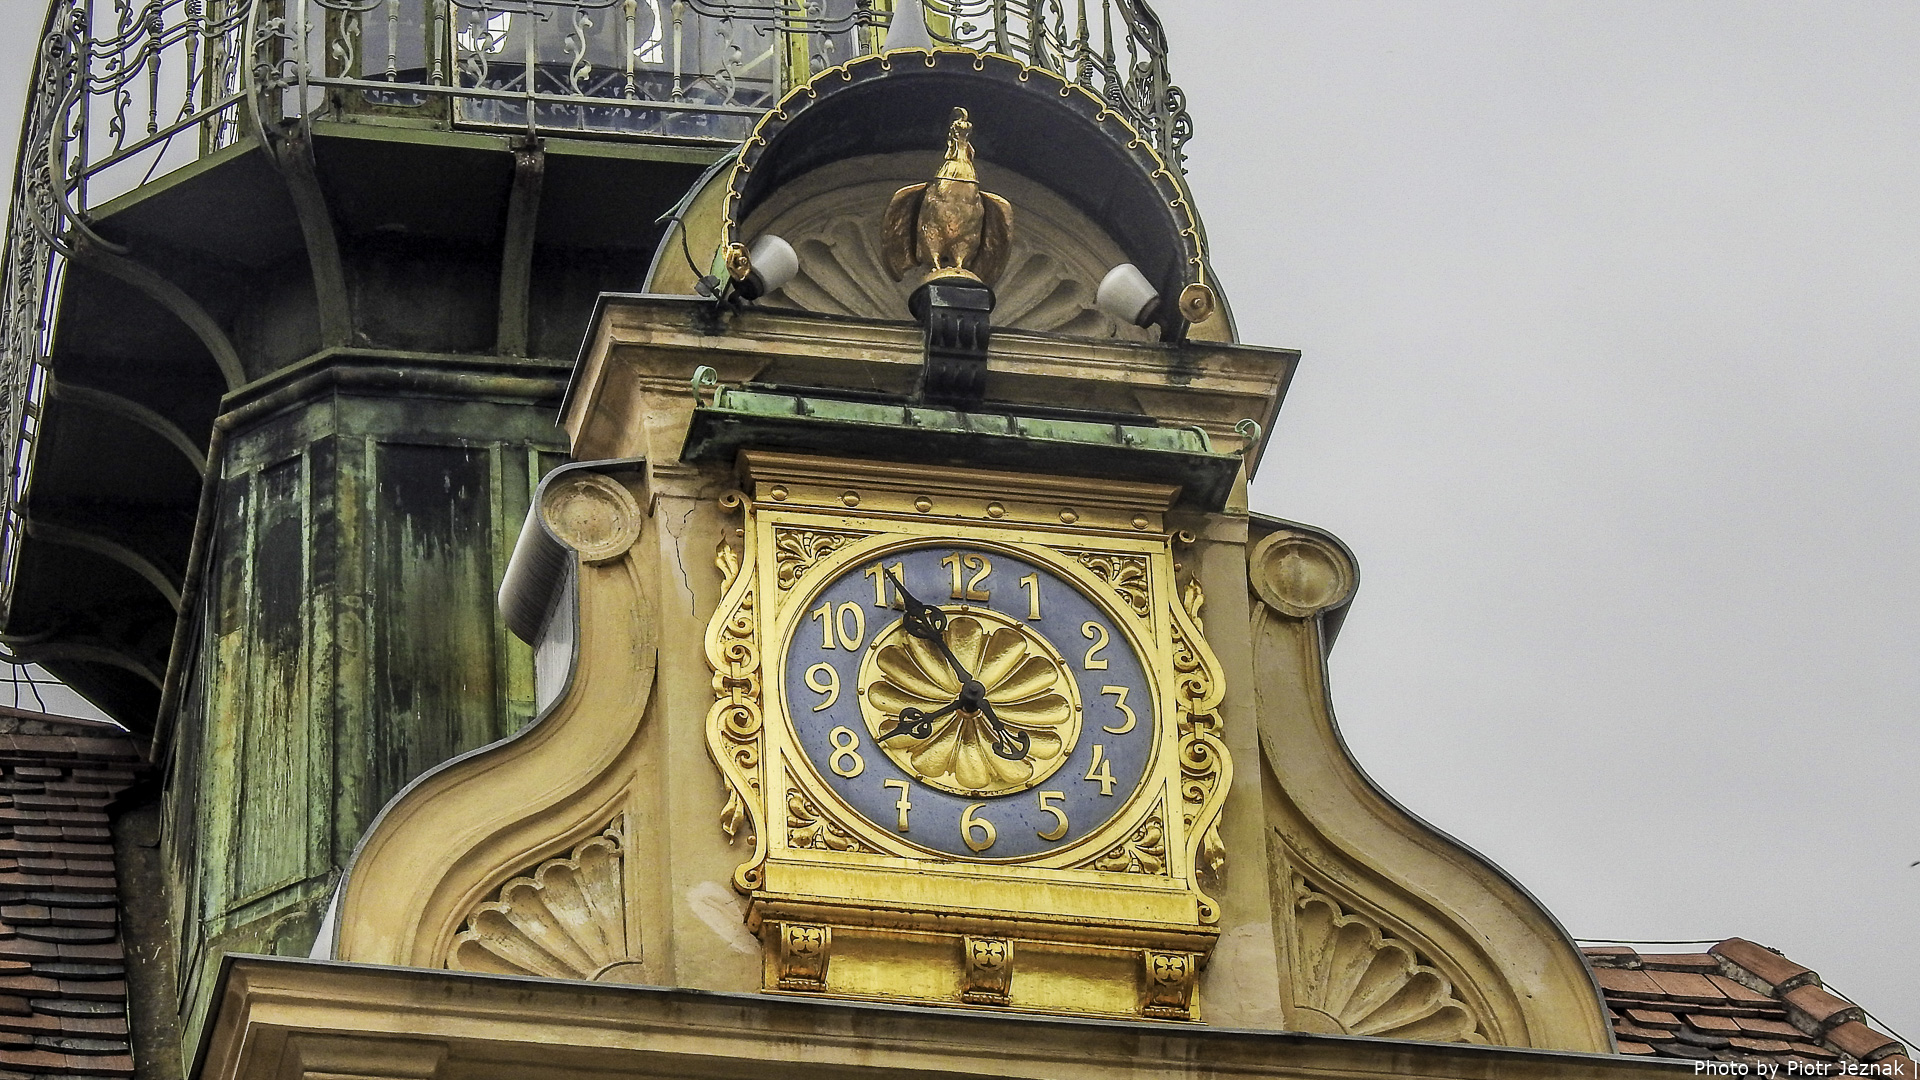 The facade clock of the carillon on the Glockenspielhaus in Graz: